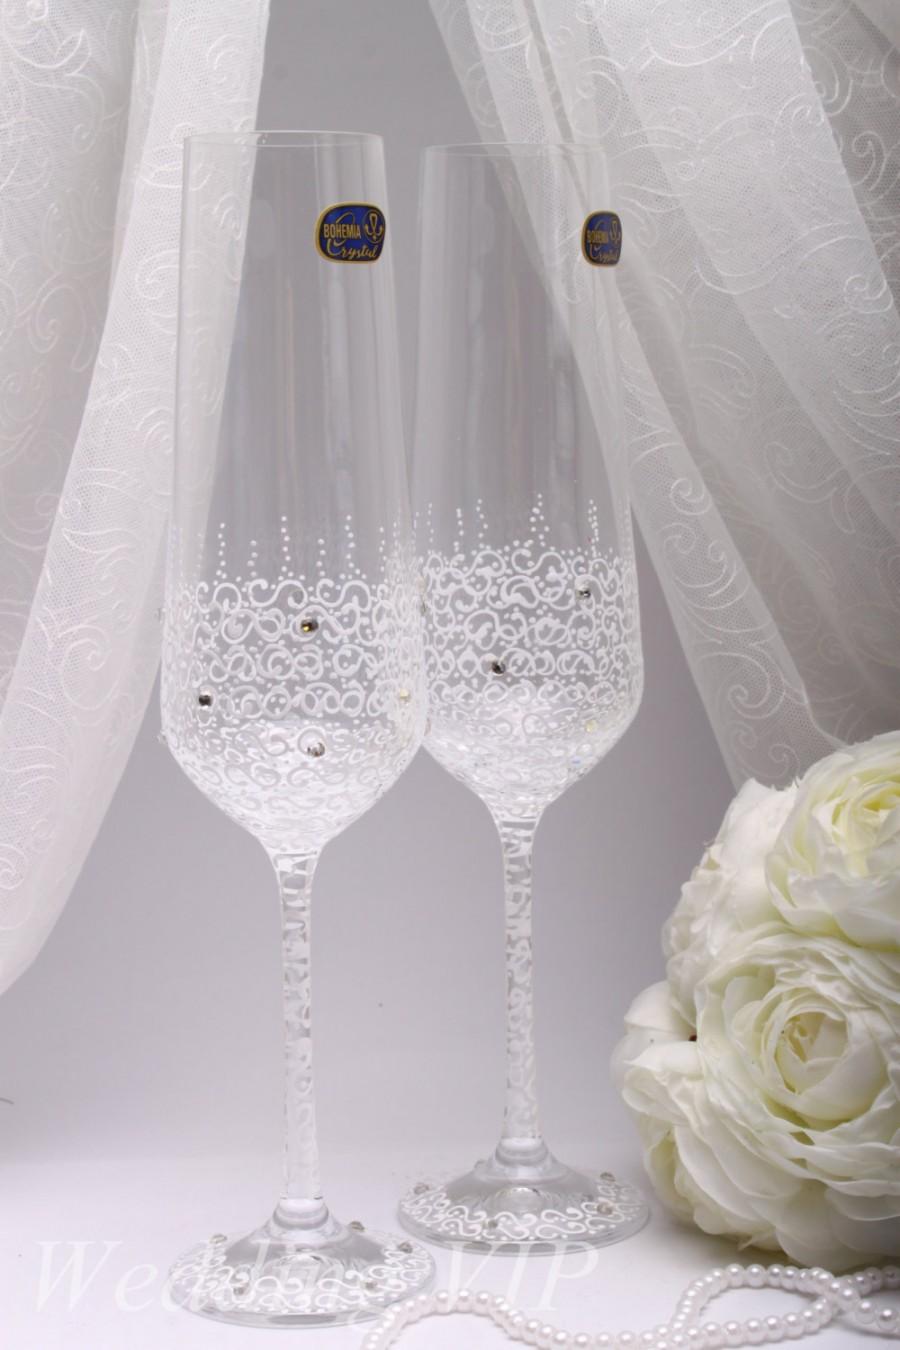 Wedding - Glasses wedding White LACE -HAND Painted- Personalized glasses Wedding Toasting Glasses champagne glasses Champagne Flutes Mr and Mrs glasse